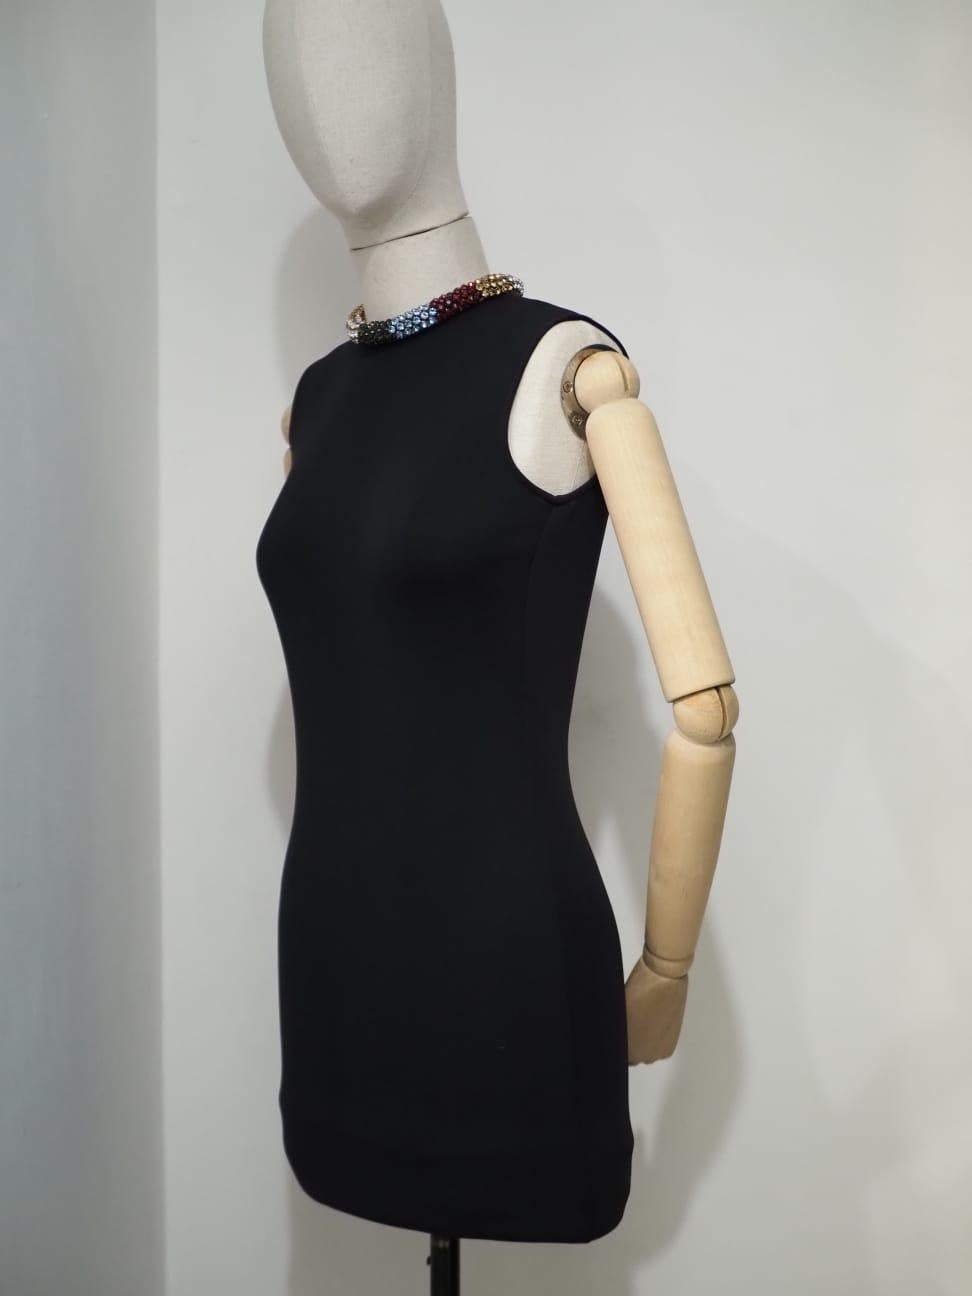 Alexander McQueen black with multicolour swarovski stones necklace dress For Sale 5